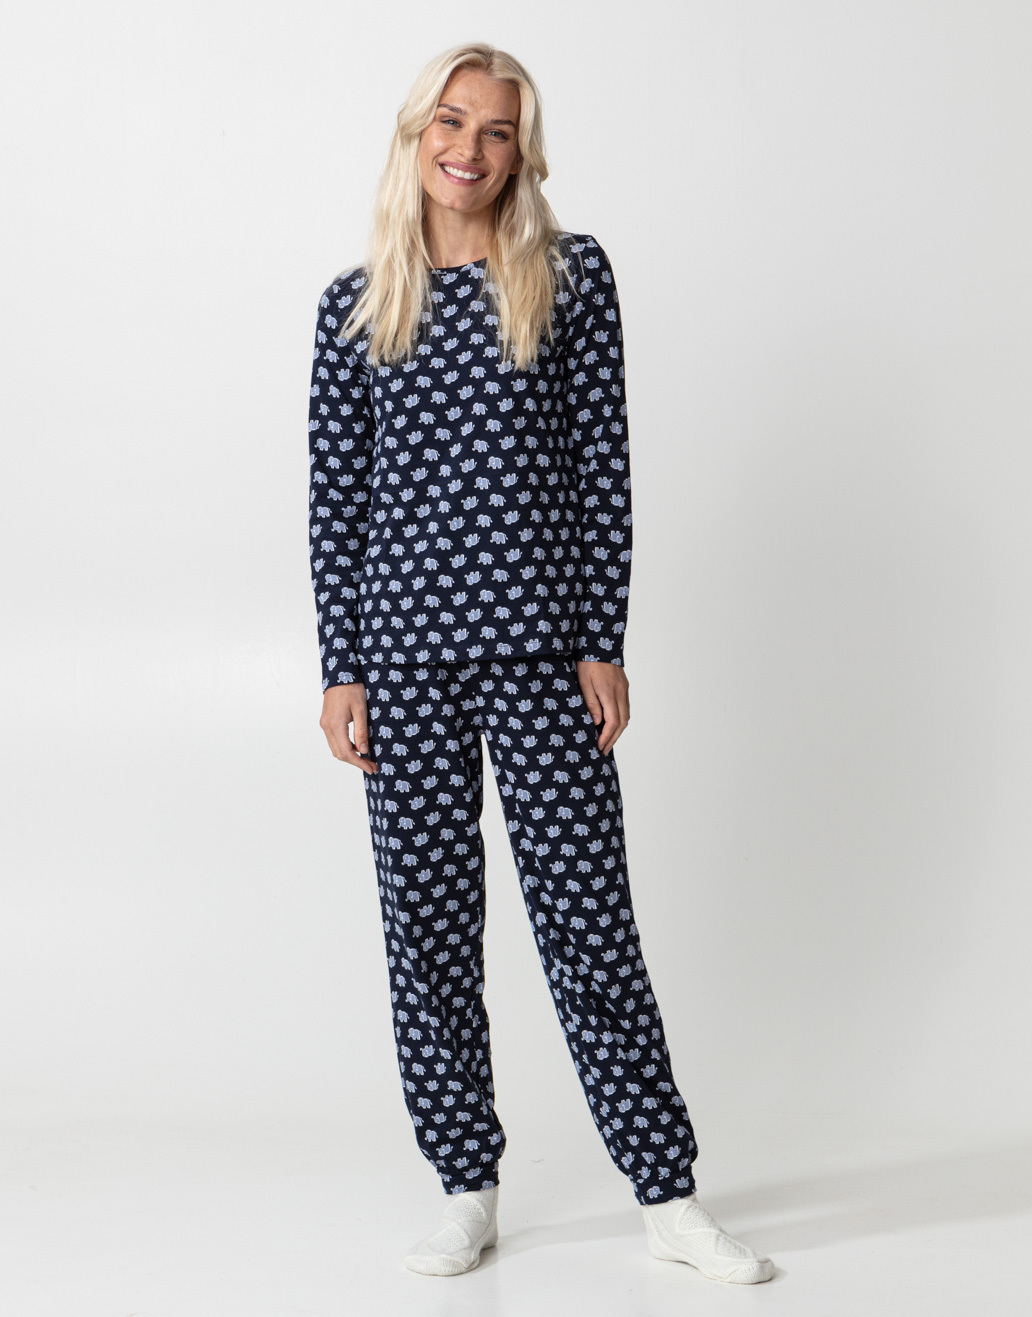 Pyjama top with elephant print Image 0